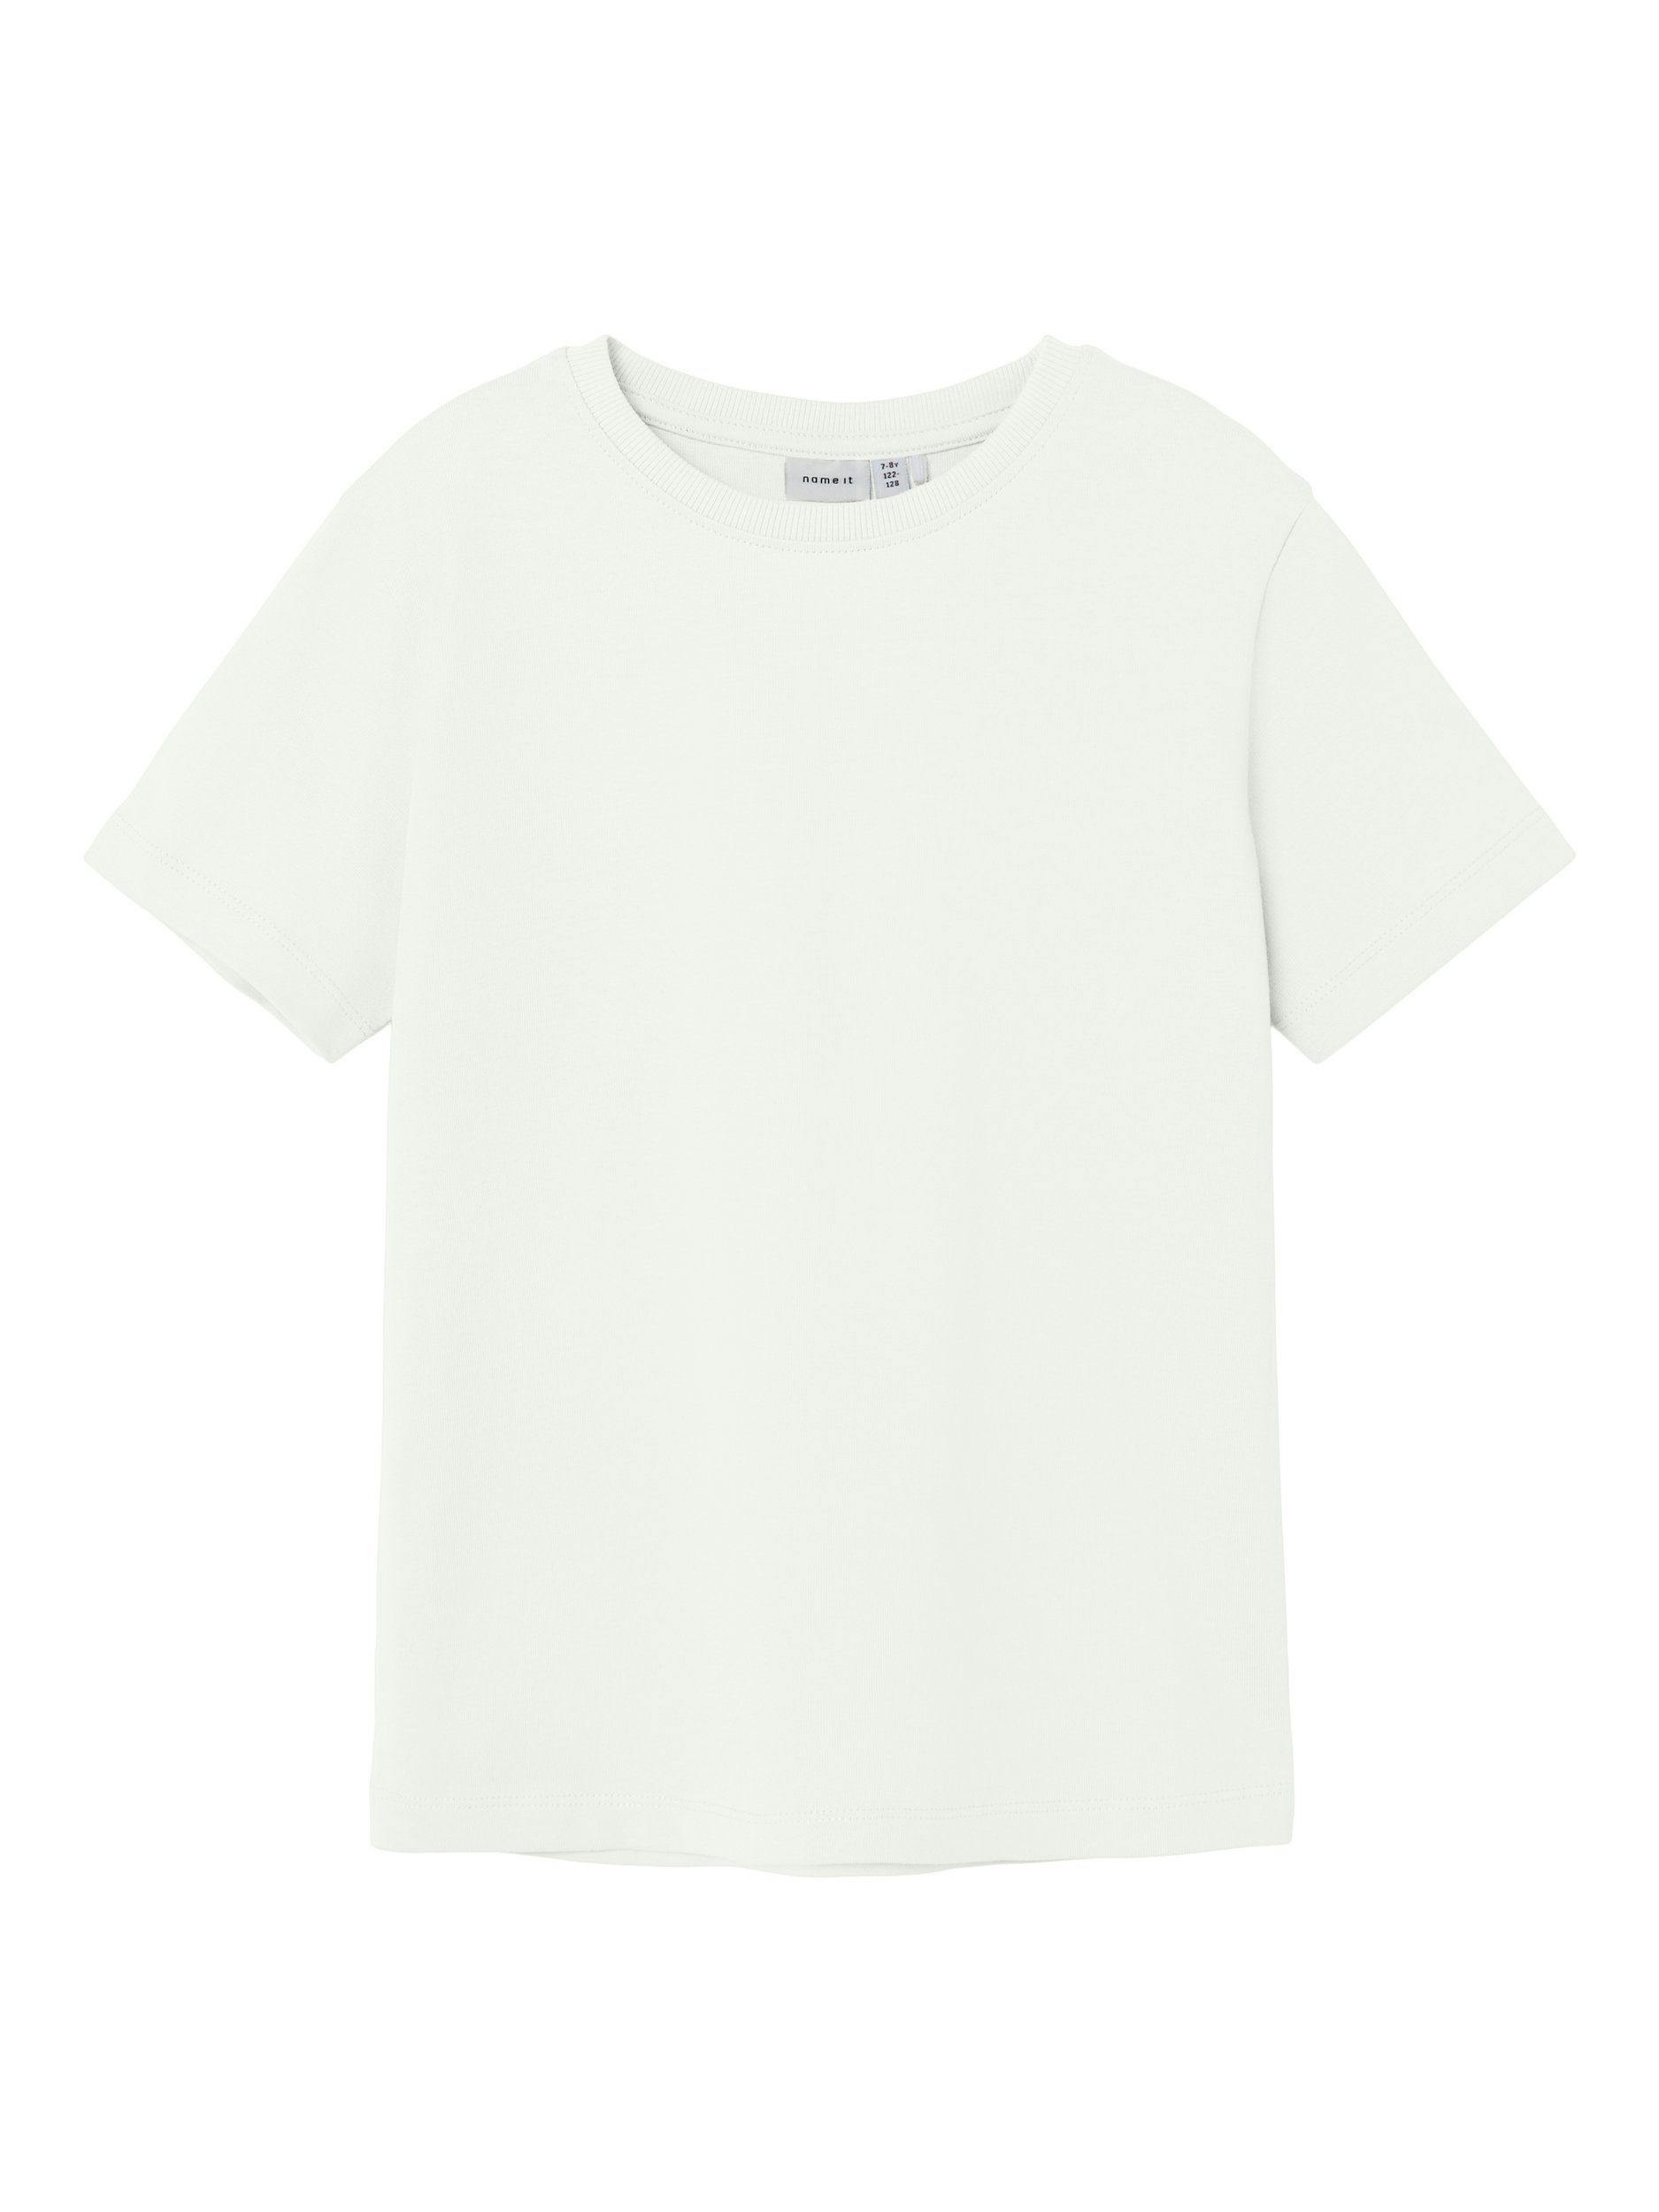 S/S white T-Shirt It TOP Name LOOSE bright NKMTORSTEN